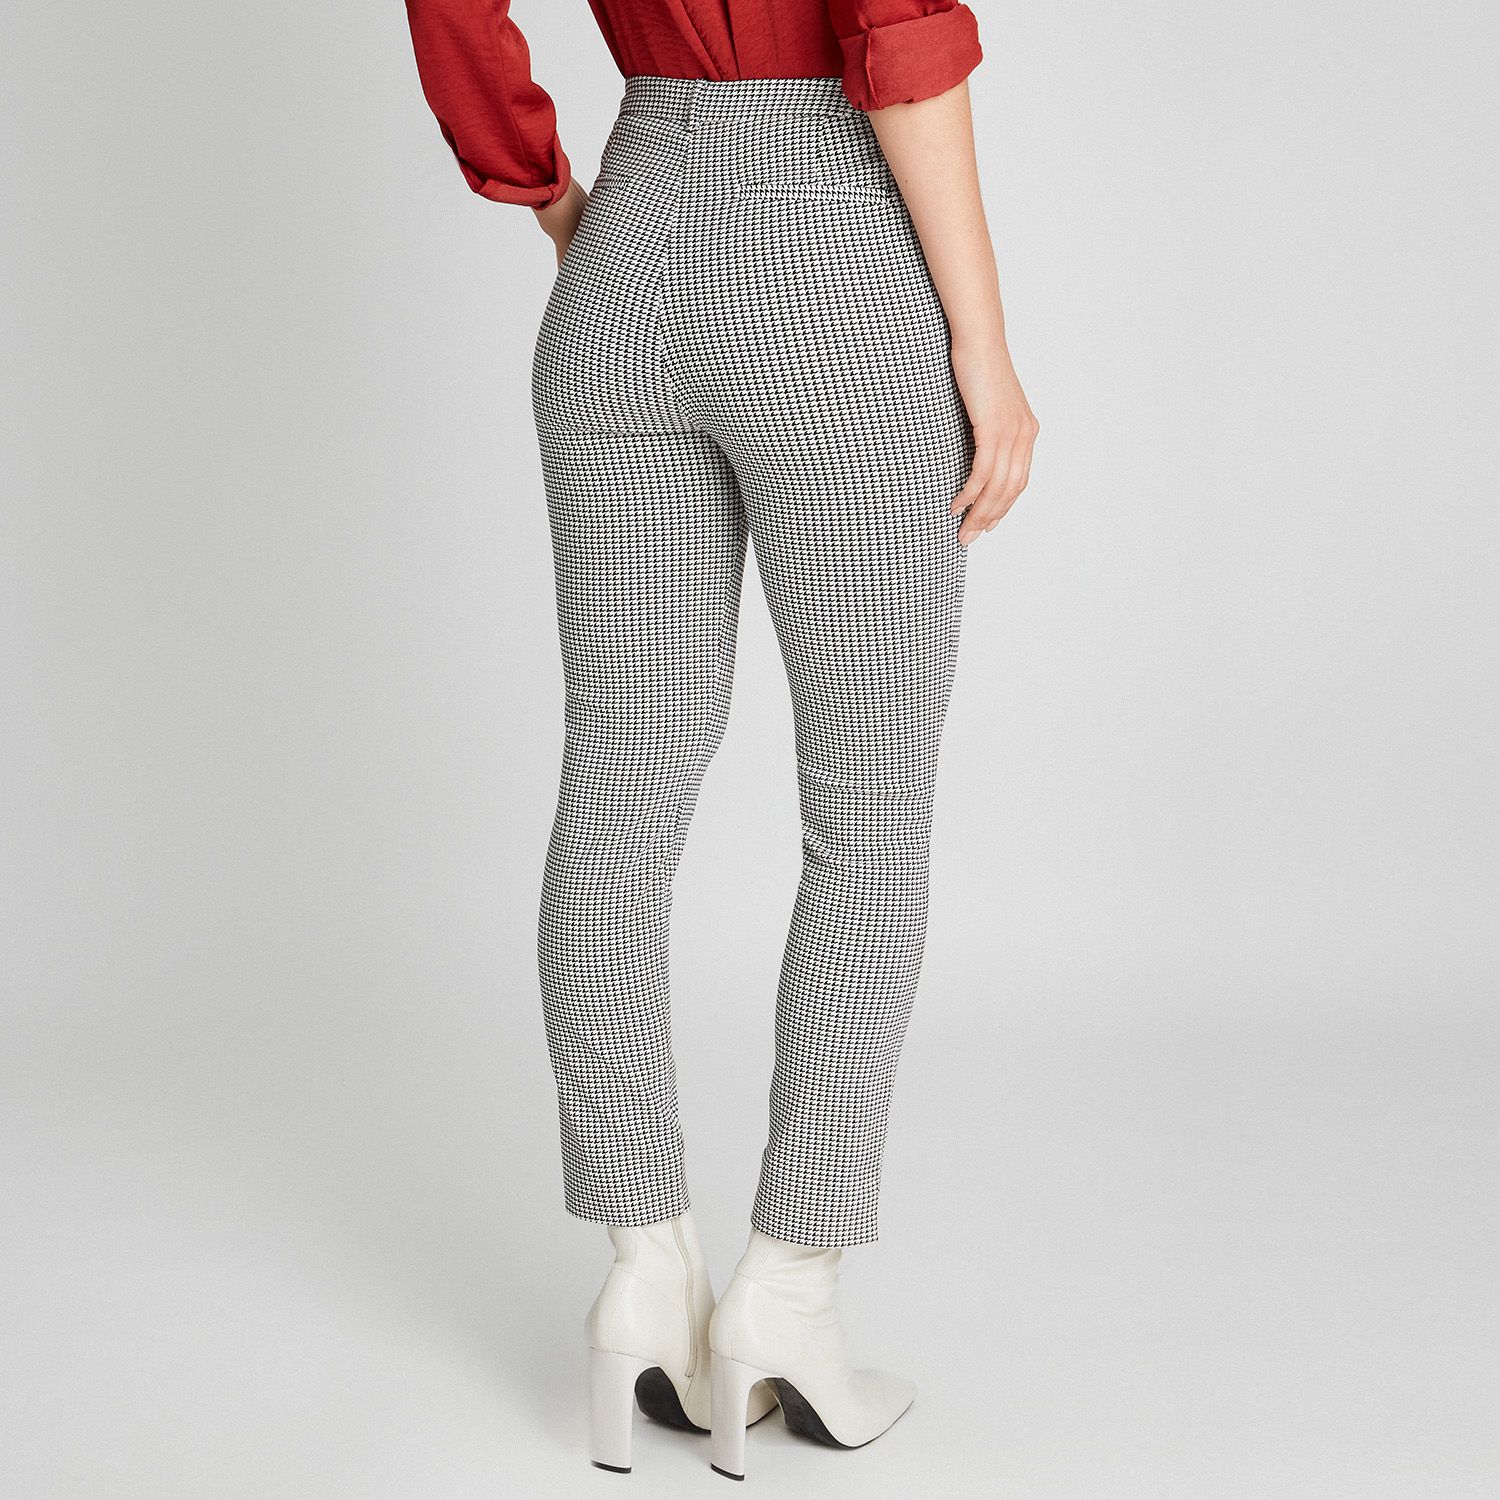 Tiffany - Pantalon Bengalina Estampado